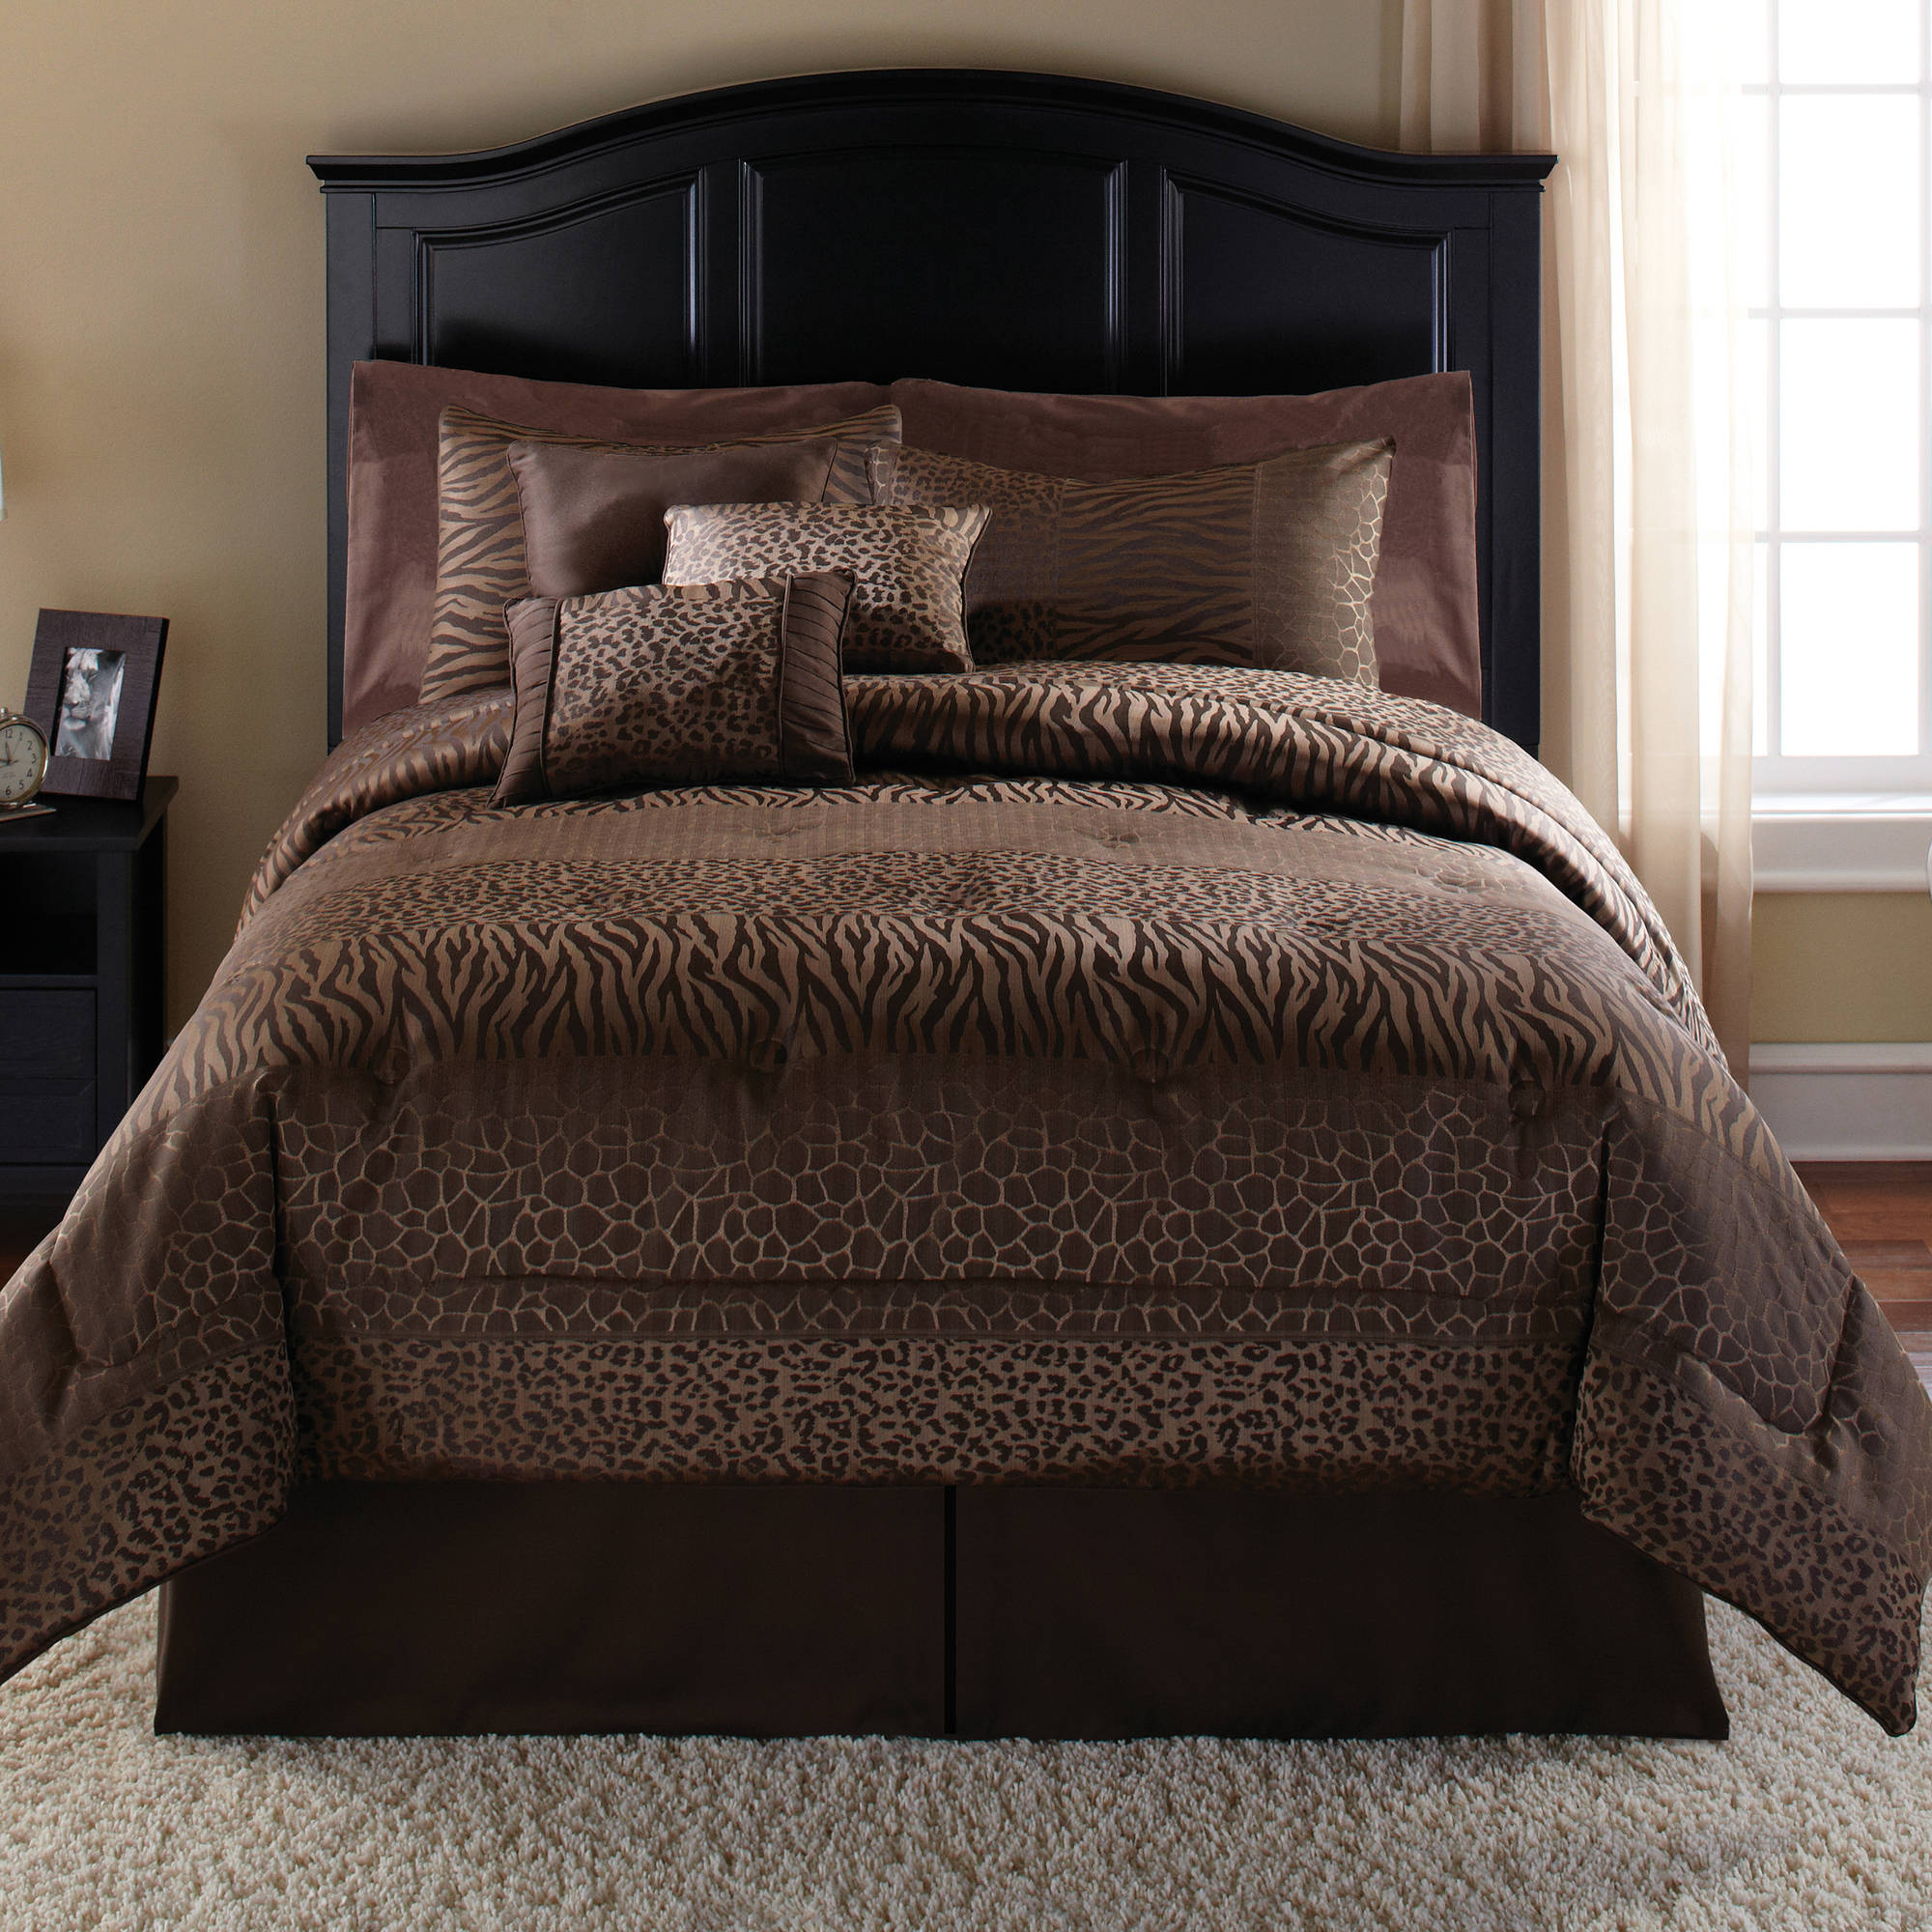 Mainstays Safari 7 Piece Bedding Comforter Set Walmart.com